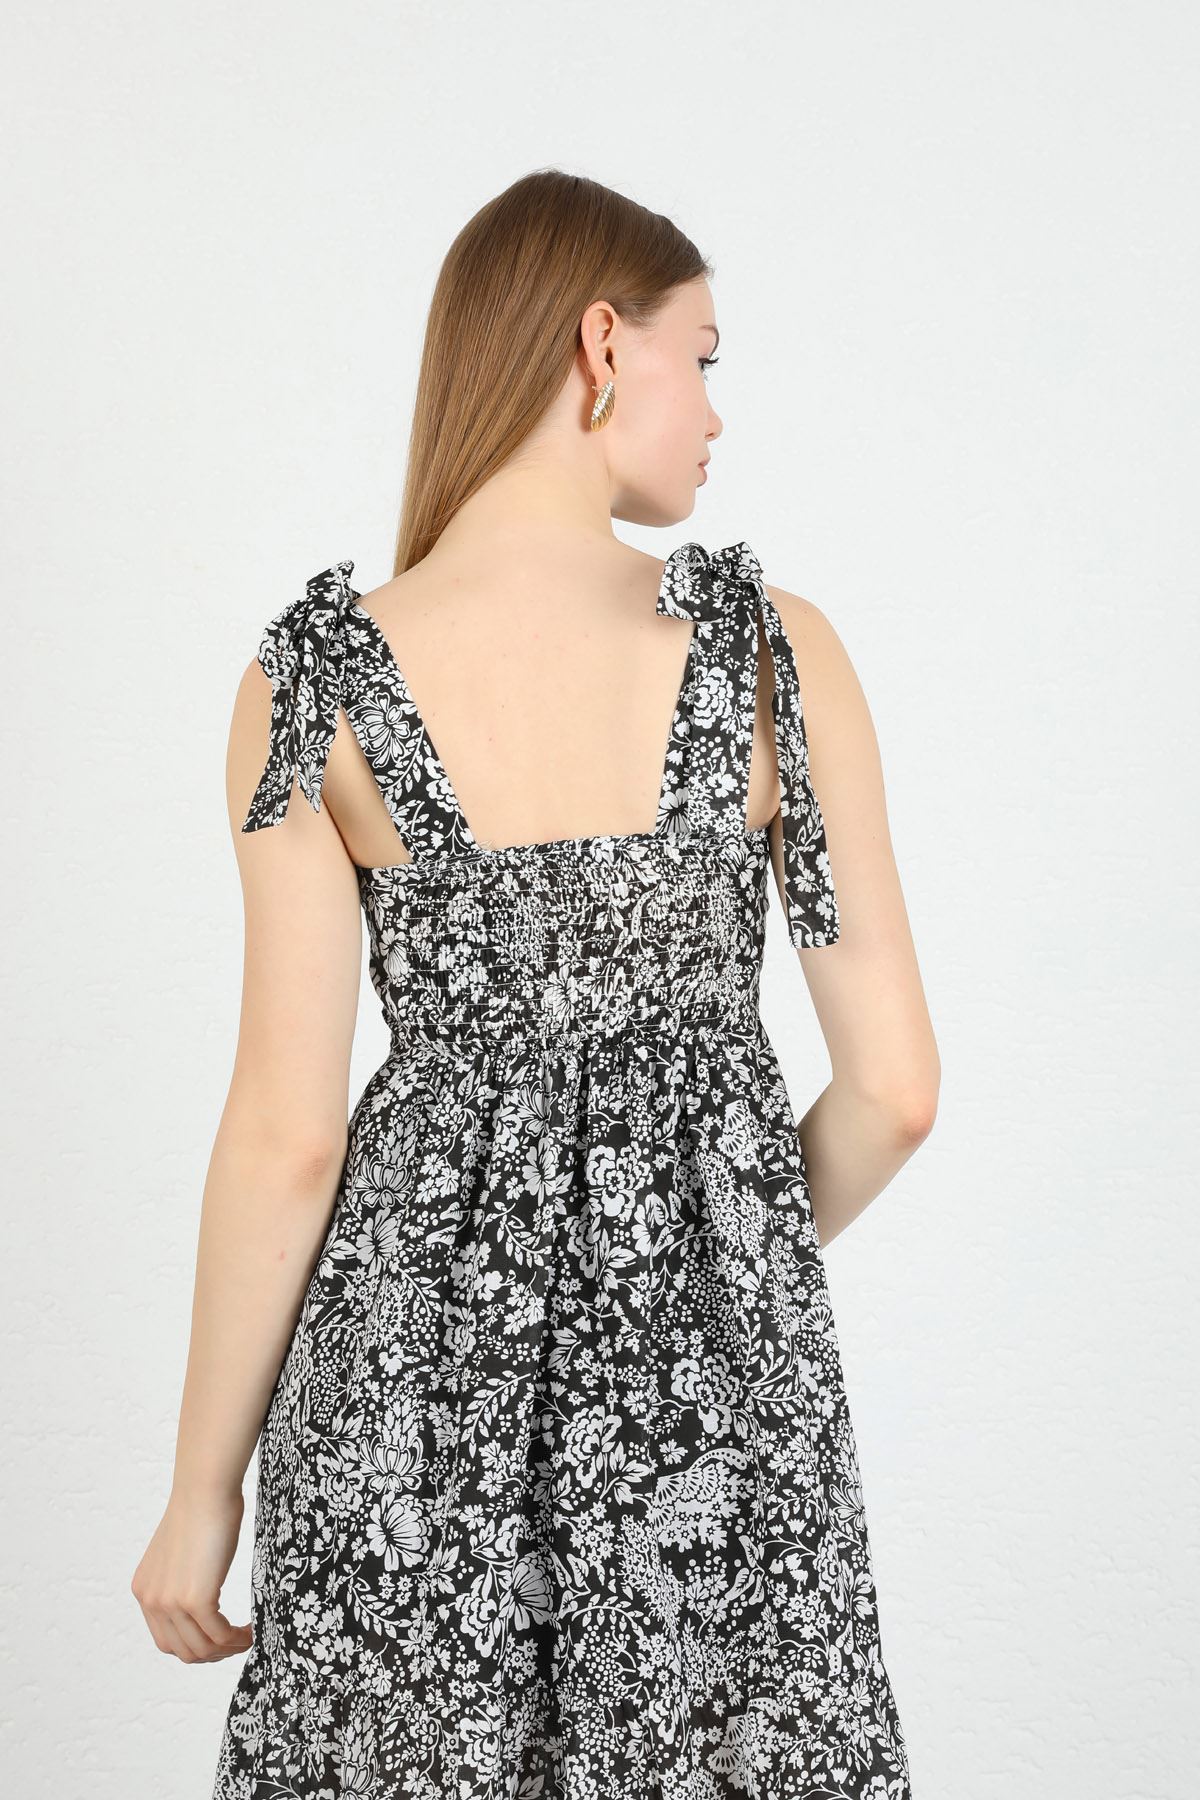 Vual Fabric Square Neck Floral Print Tied Shoulder Women Dress - Black